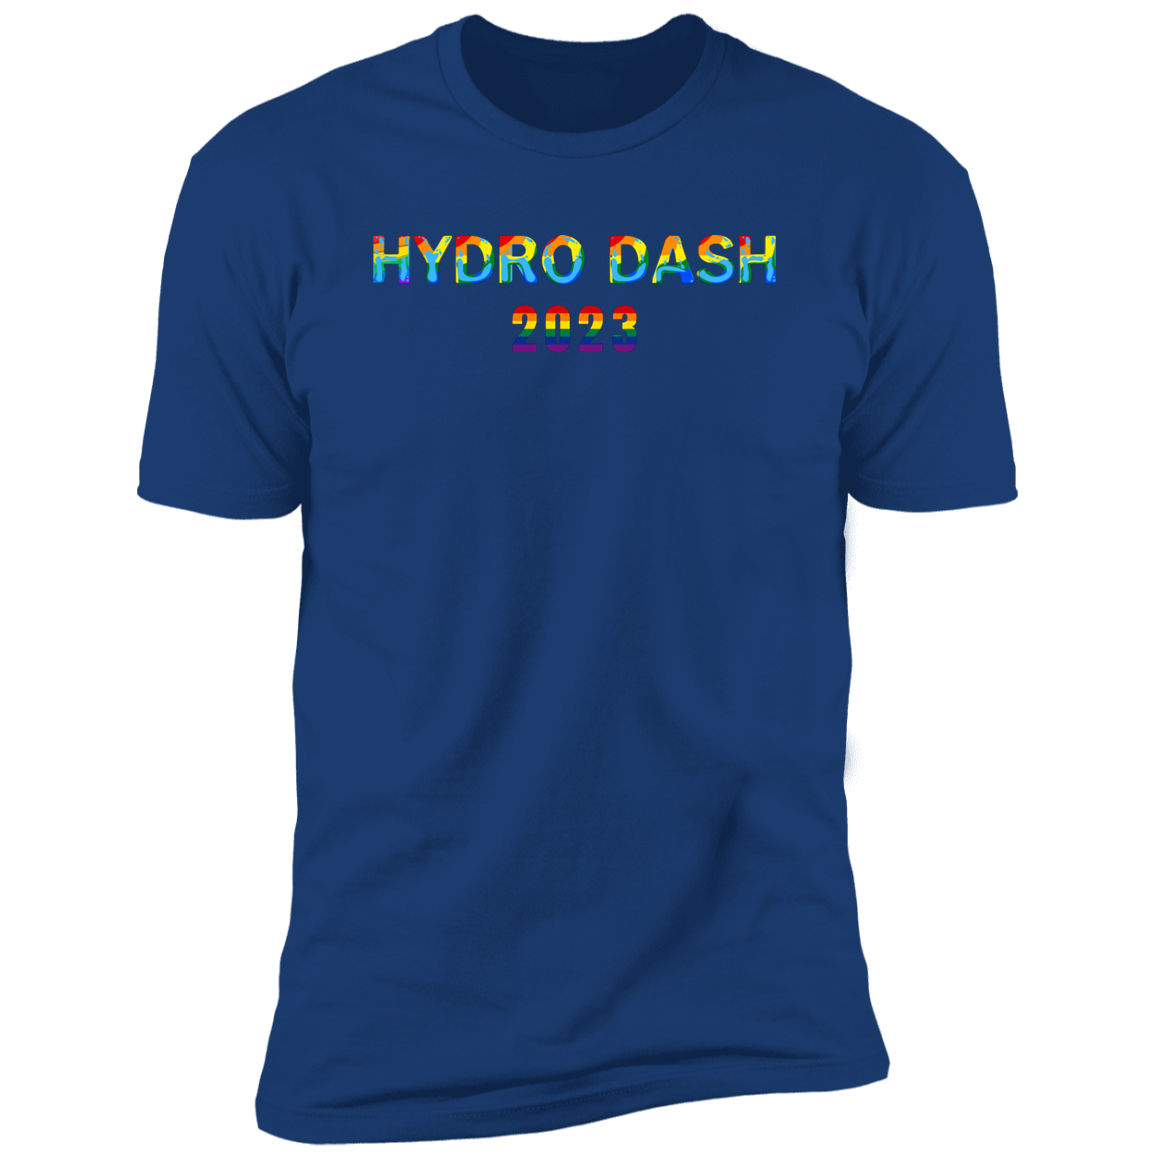 Hydro Dash Pride 2023 t-shirt, dog pride dog Hydro dash shirt for humans, in royal blue